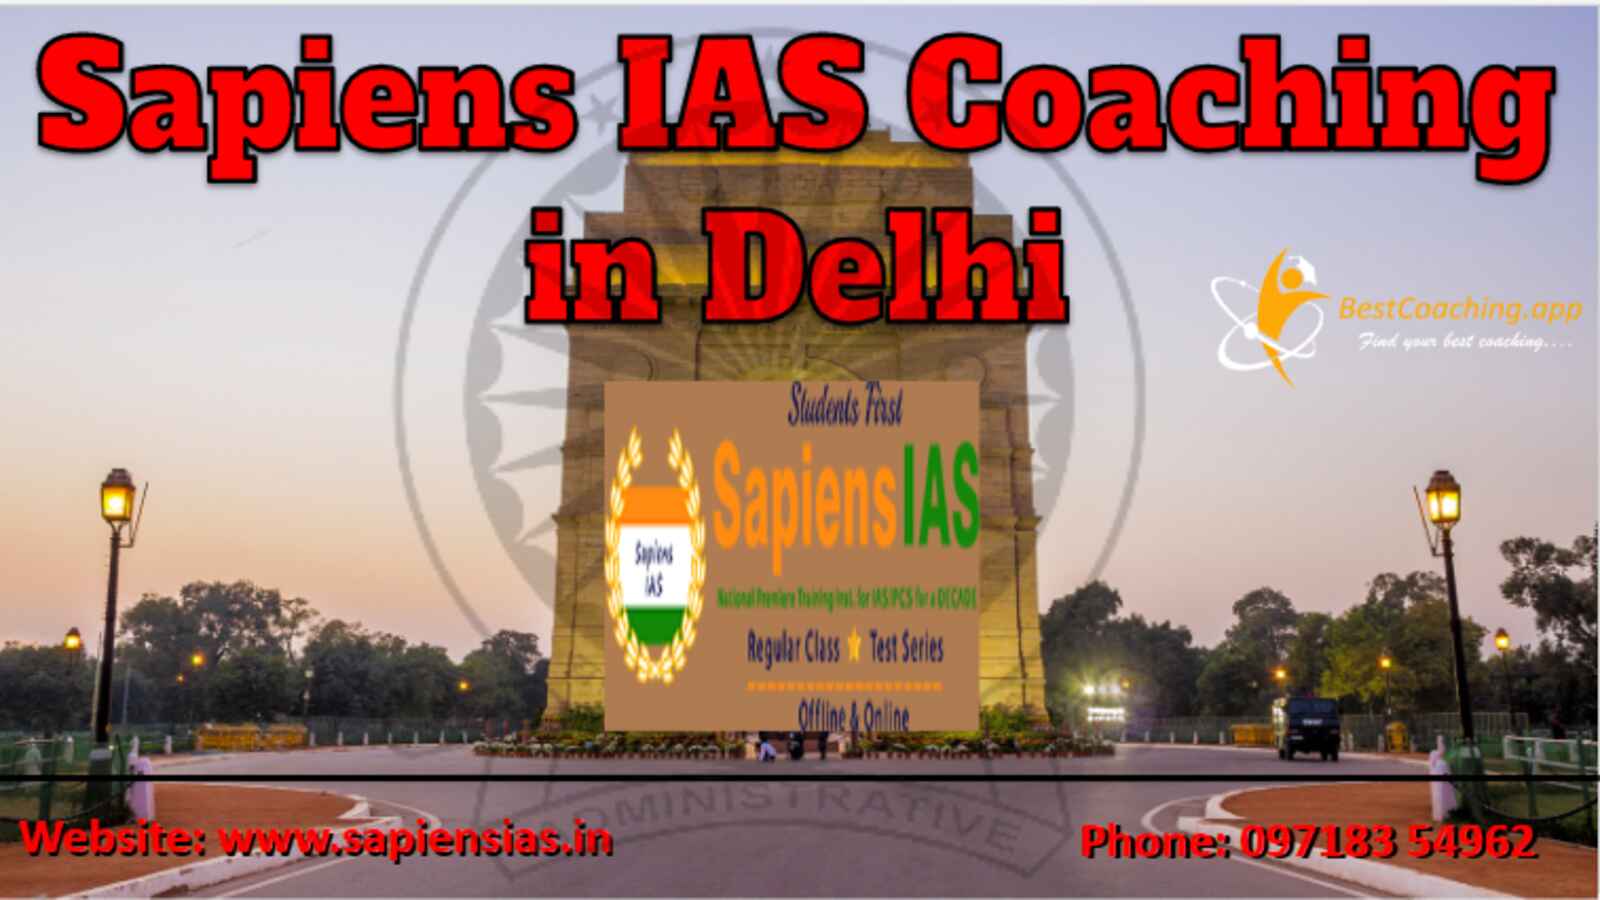 Sapiens IAS Coaching Delhi